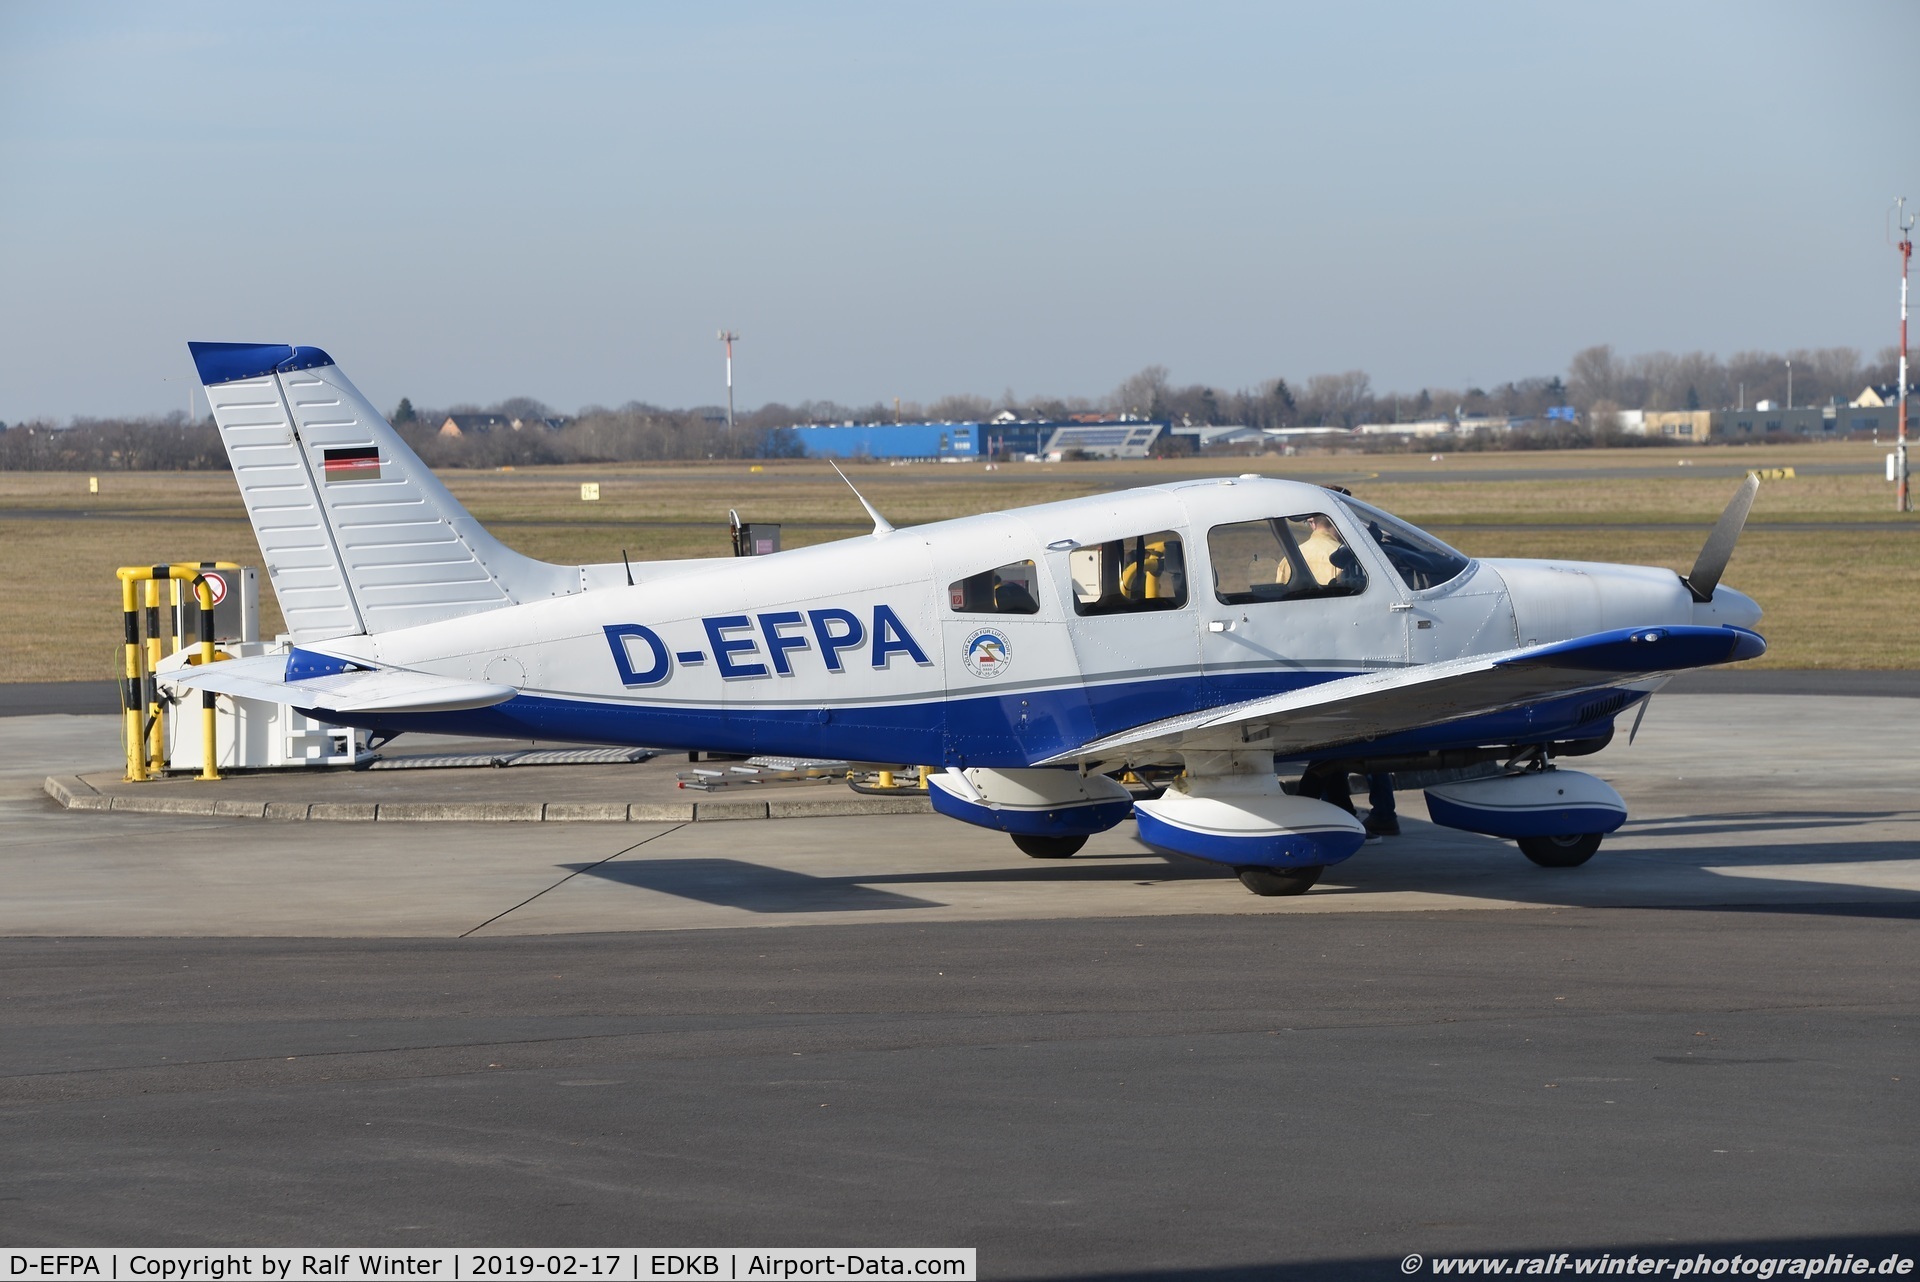 D-EFPA, 1978 Piper PA-28-181 C/N 28-90077, Piper PA-28-181 Archer 2 - Kölner Klub für Luftsport - 2890077 - D-EFPA - 17.02.2019 - EDKB